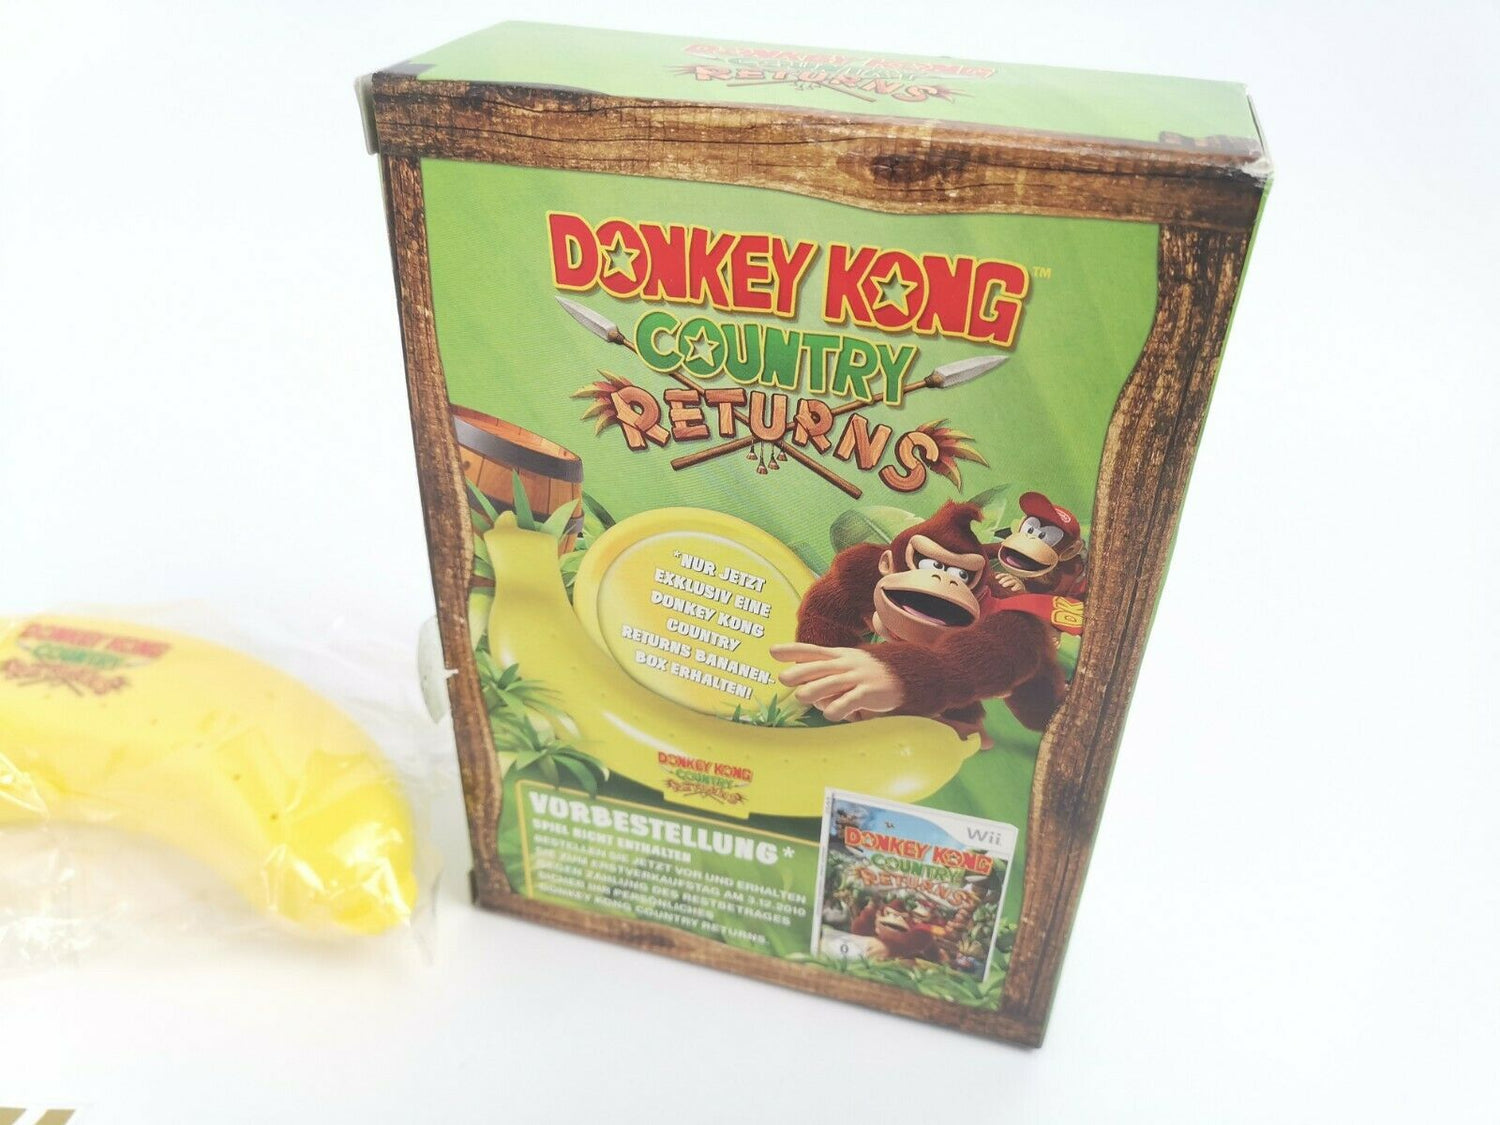 Donkey Kong Country Bananen-Box | Nintendo Wii | Vorbestellung